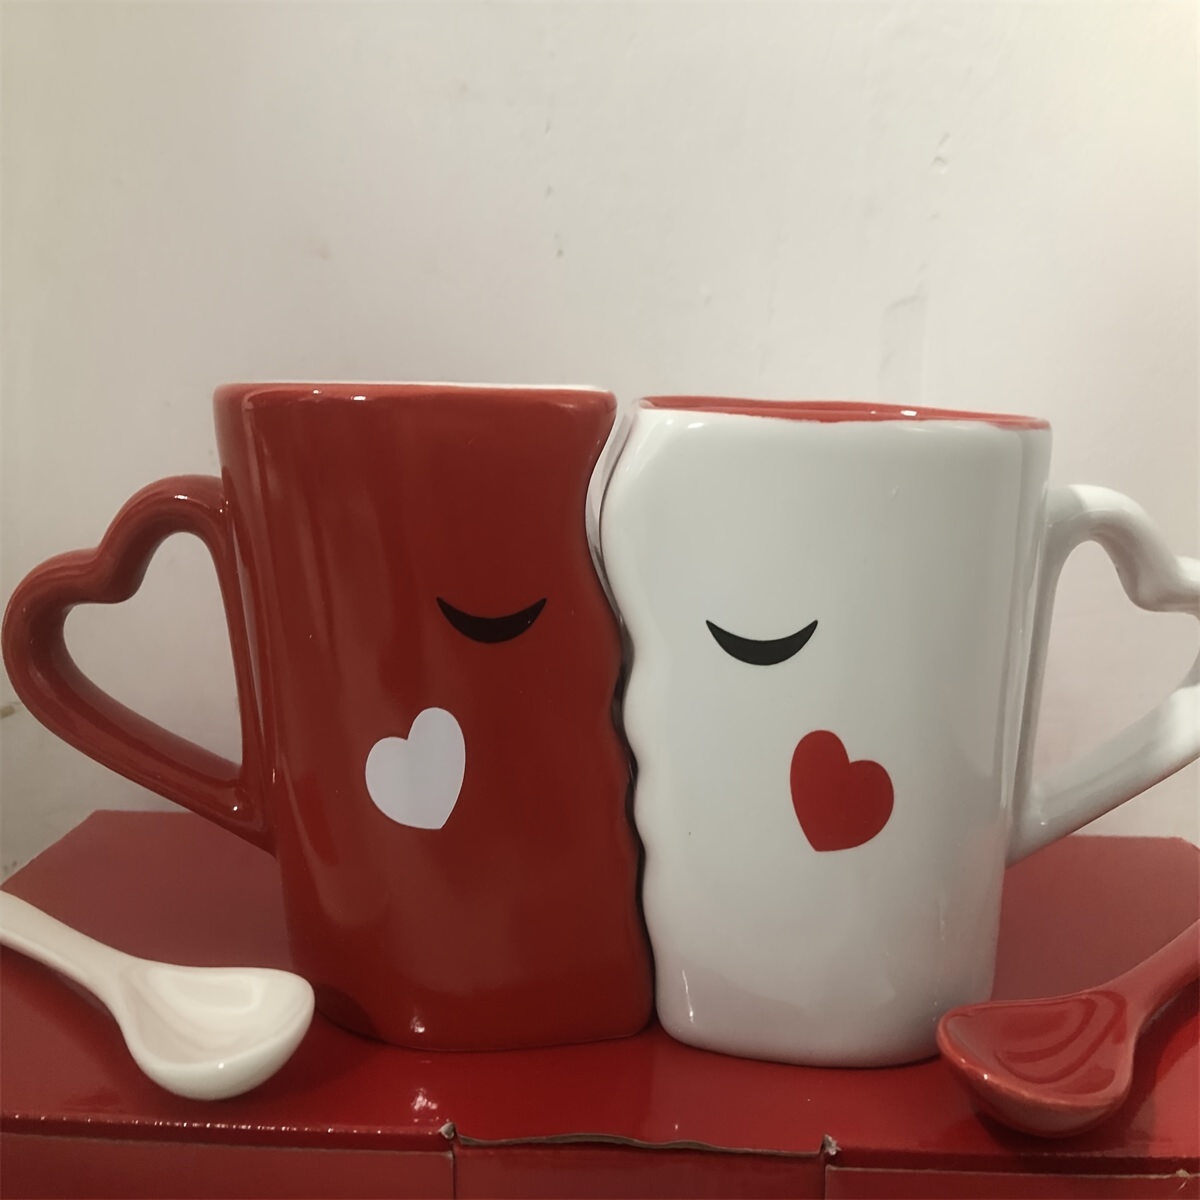 Tazas para Parejas Esposos , Bride and Groom mugs for Couples in Spanish